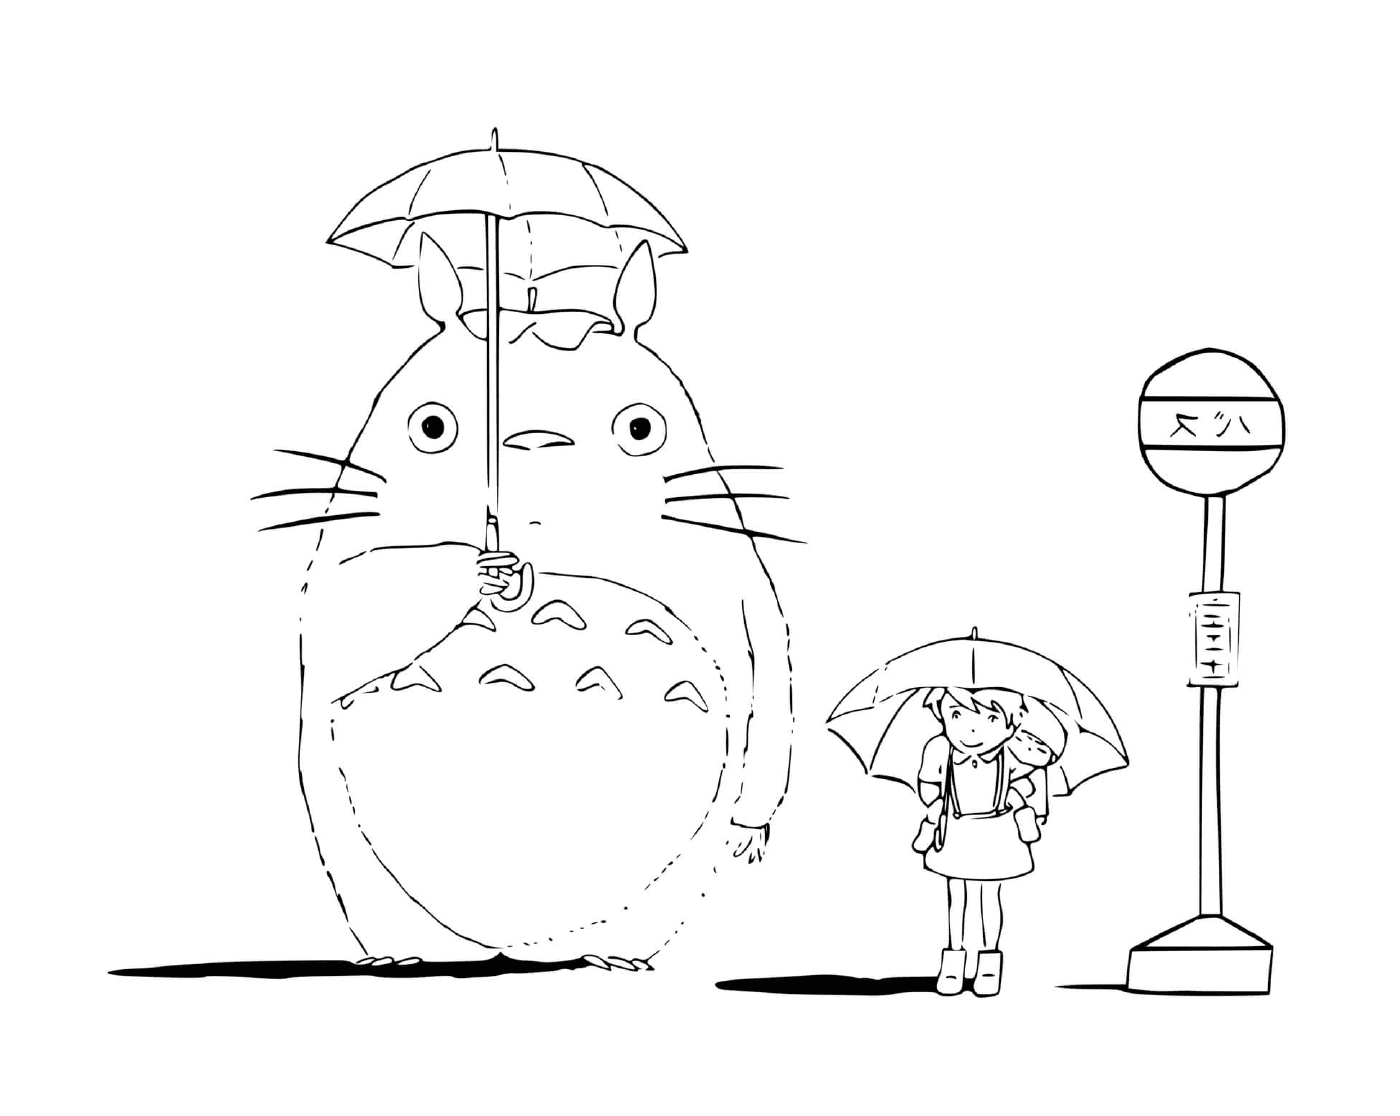   Totoro tenant un parapluie 